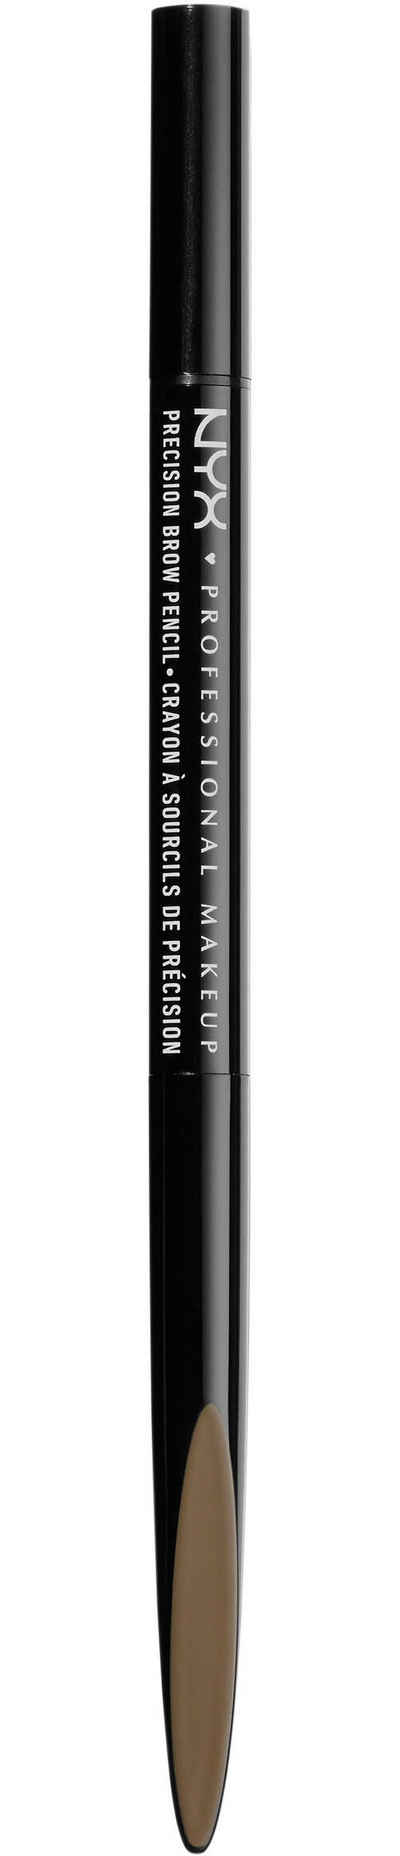 NYX Augenbrauen-Stift »Professional Makeup Precision Brow Pencil«